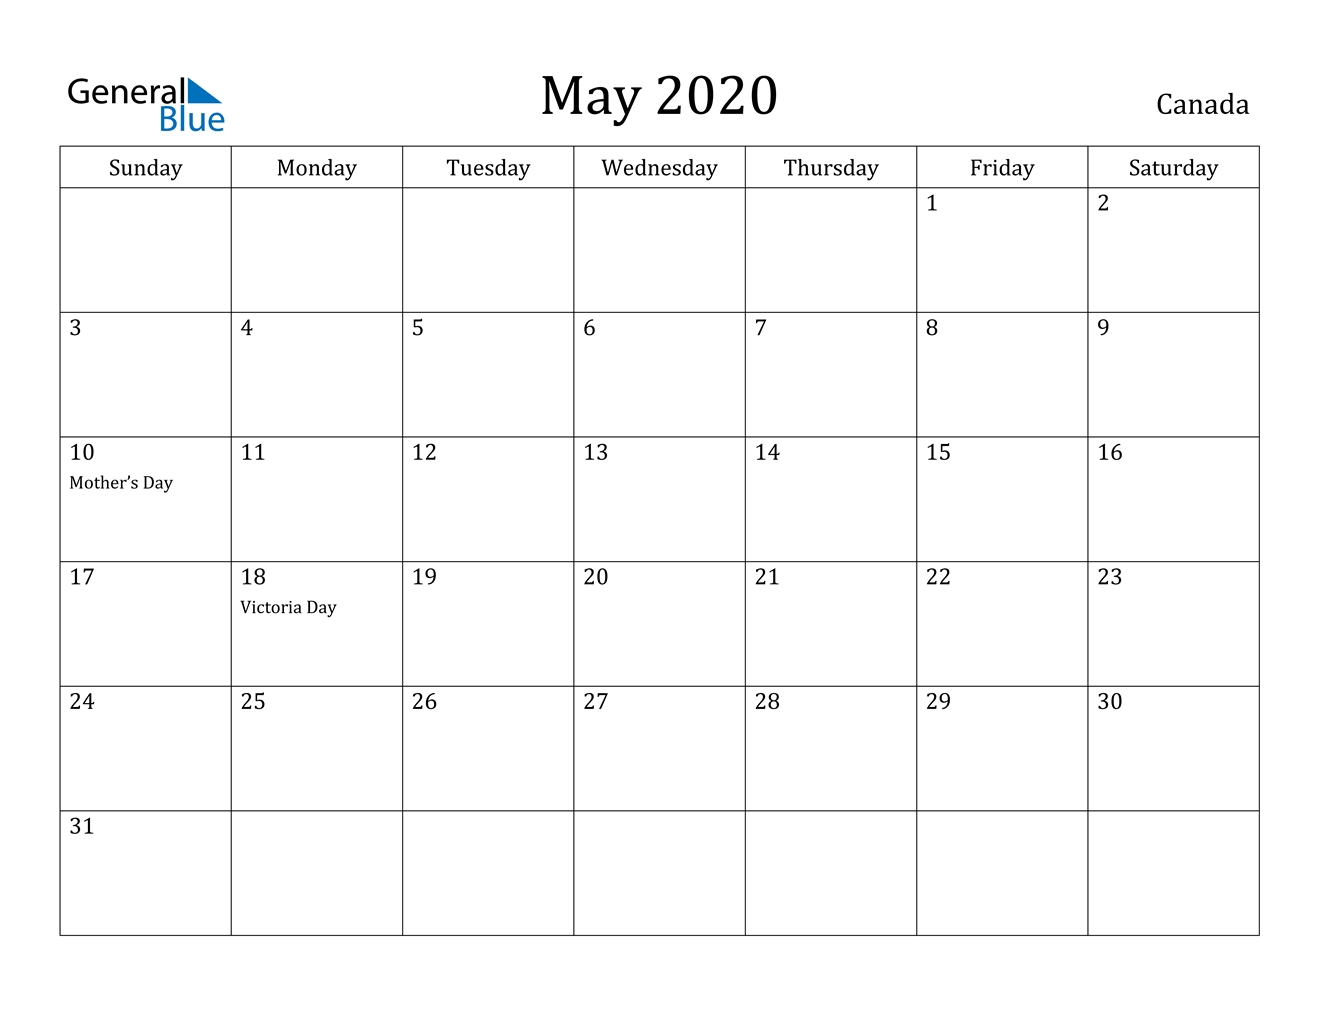 May 2020 Calendar - Canada Dashing May 2020 Calendar Canada